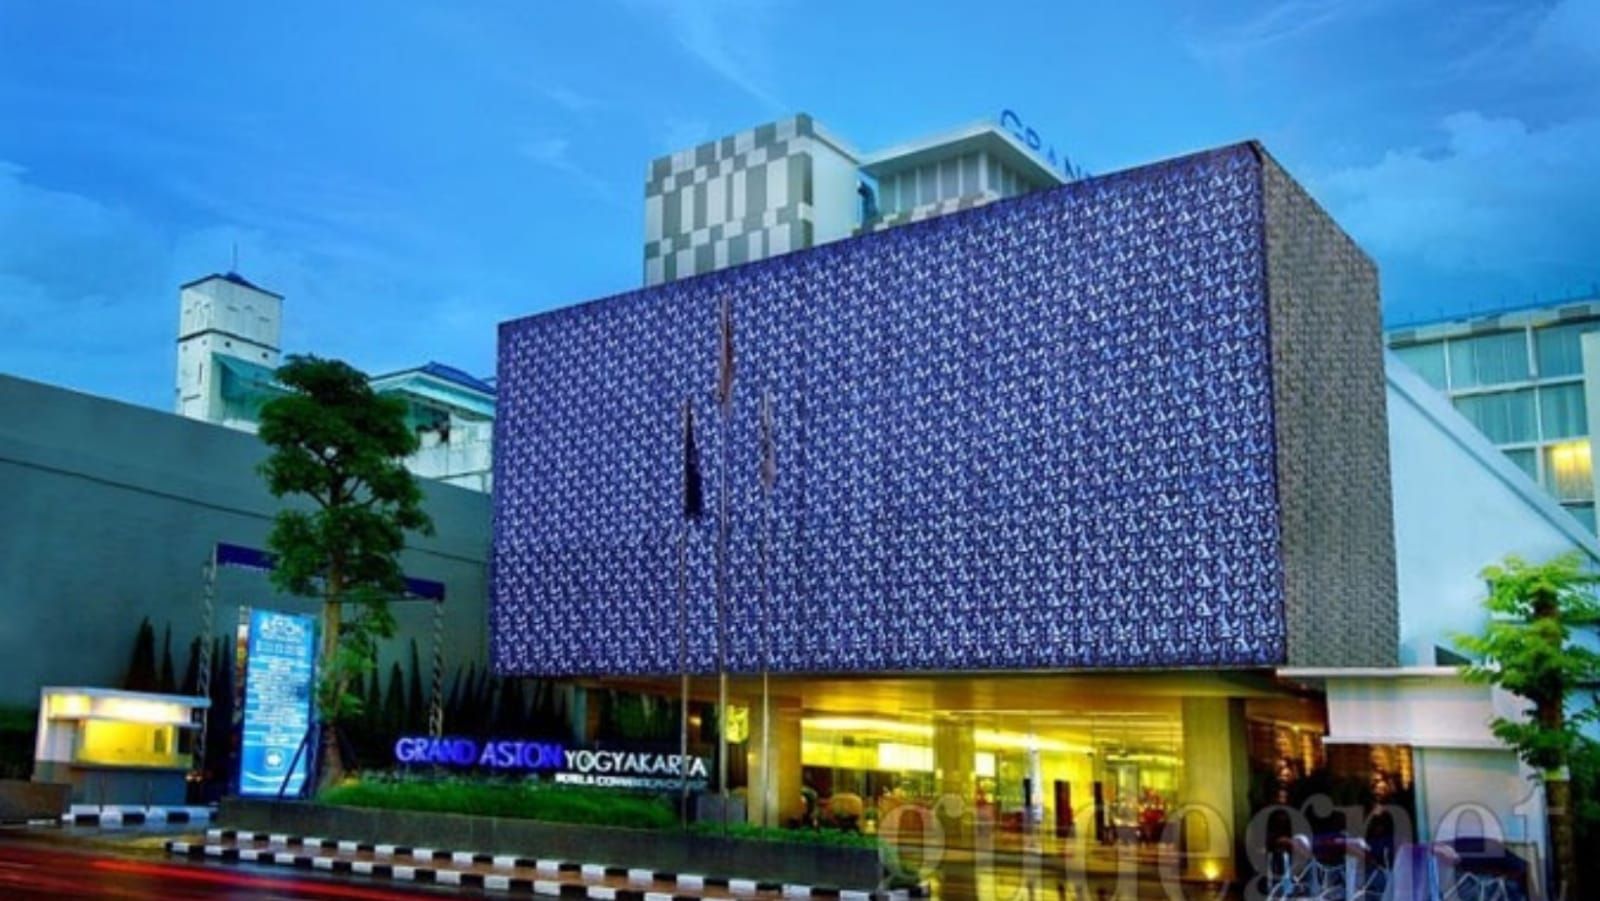 Hotel bintang lima Grand Aston Yogyakarta Hotel yang hits di Yogyakarta/